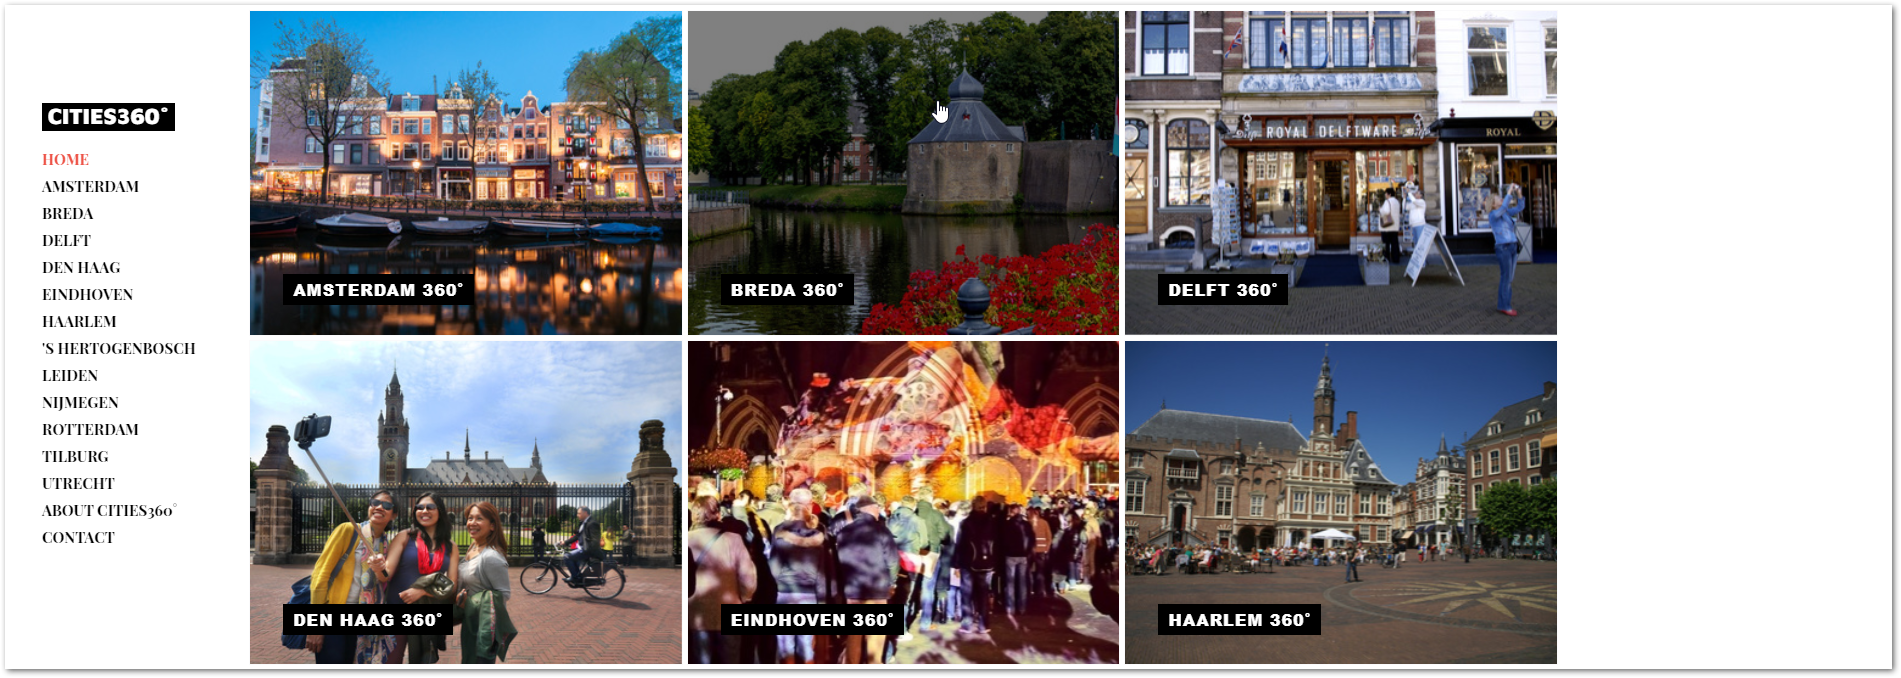 Cities360.nl